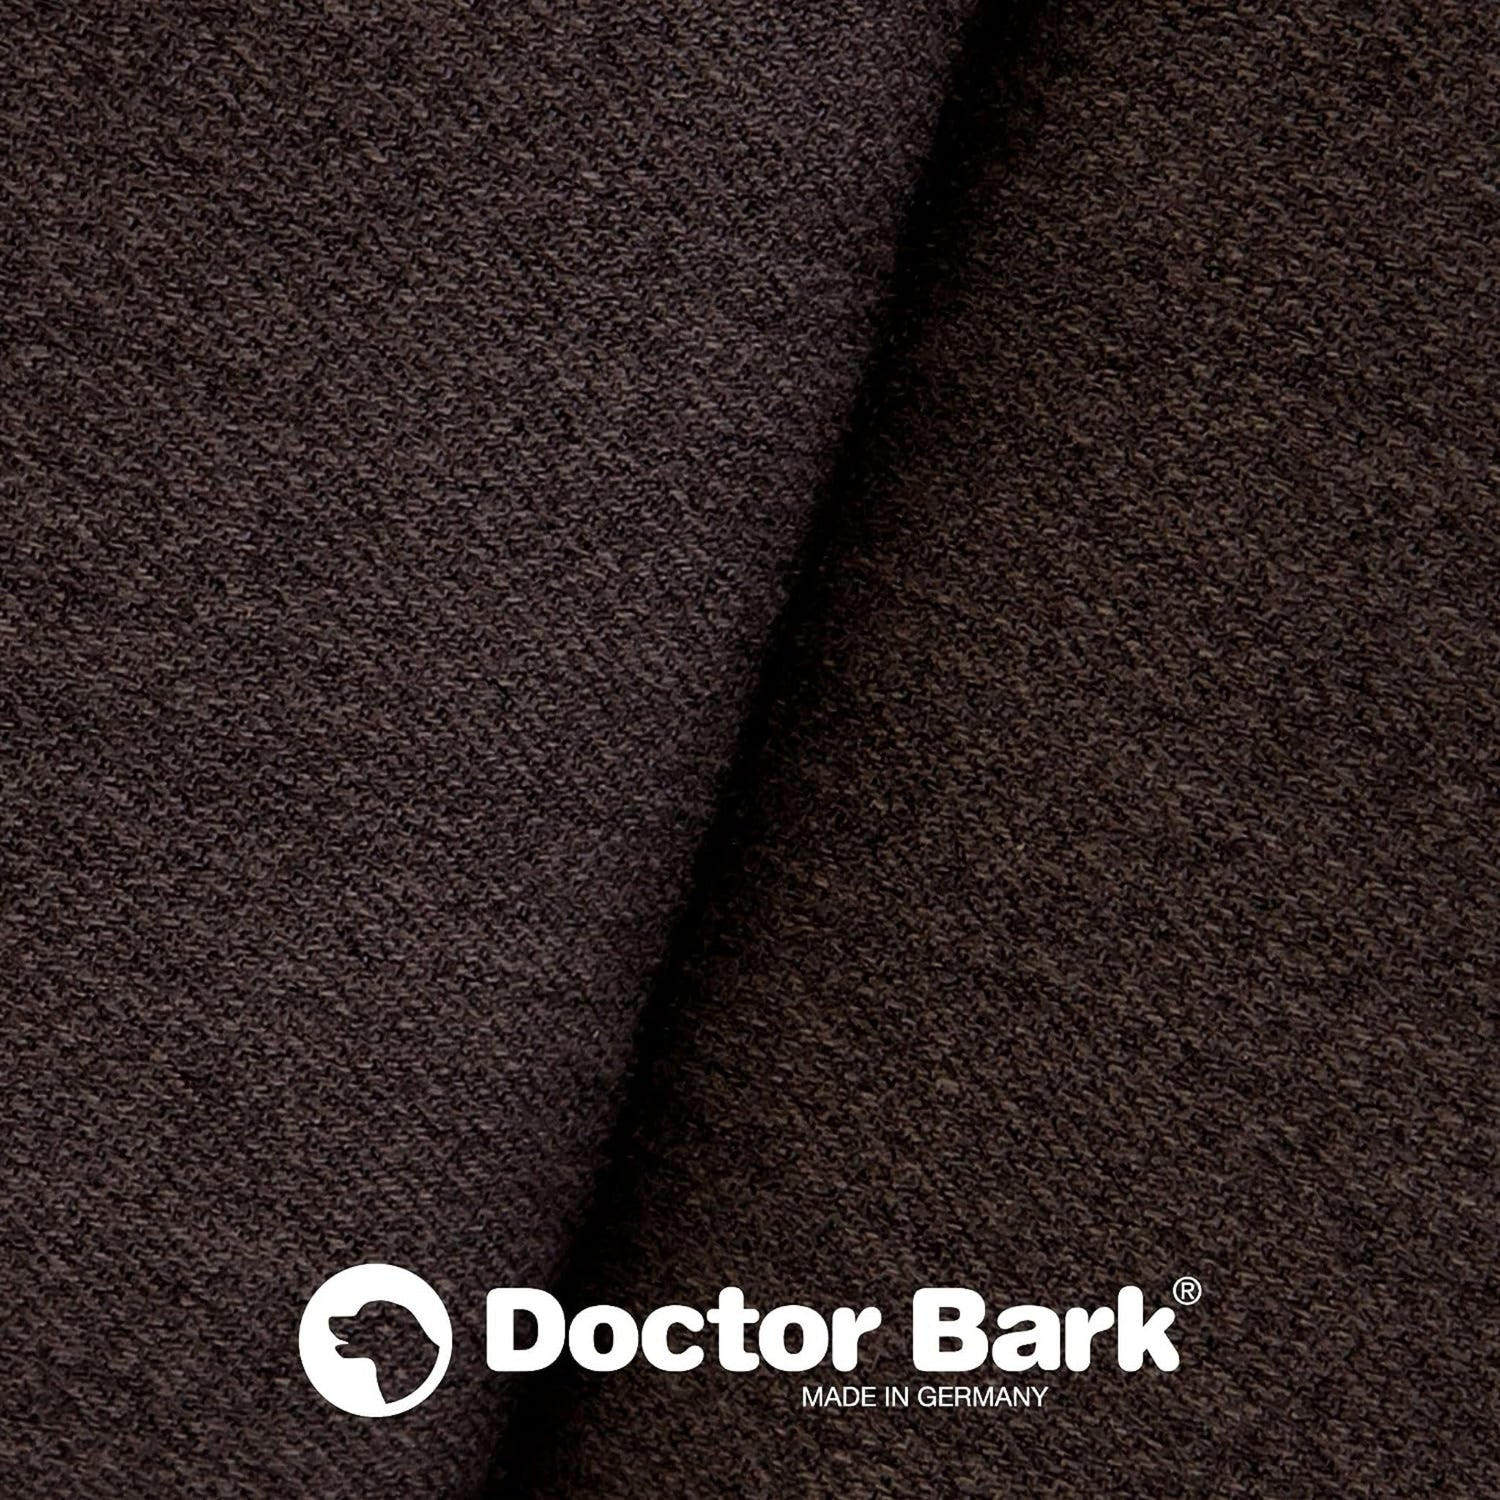 Doctor Bark® Autodecke für den Rücksitz (1 Sitz)